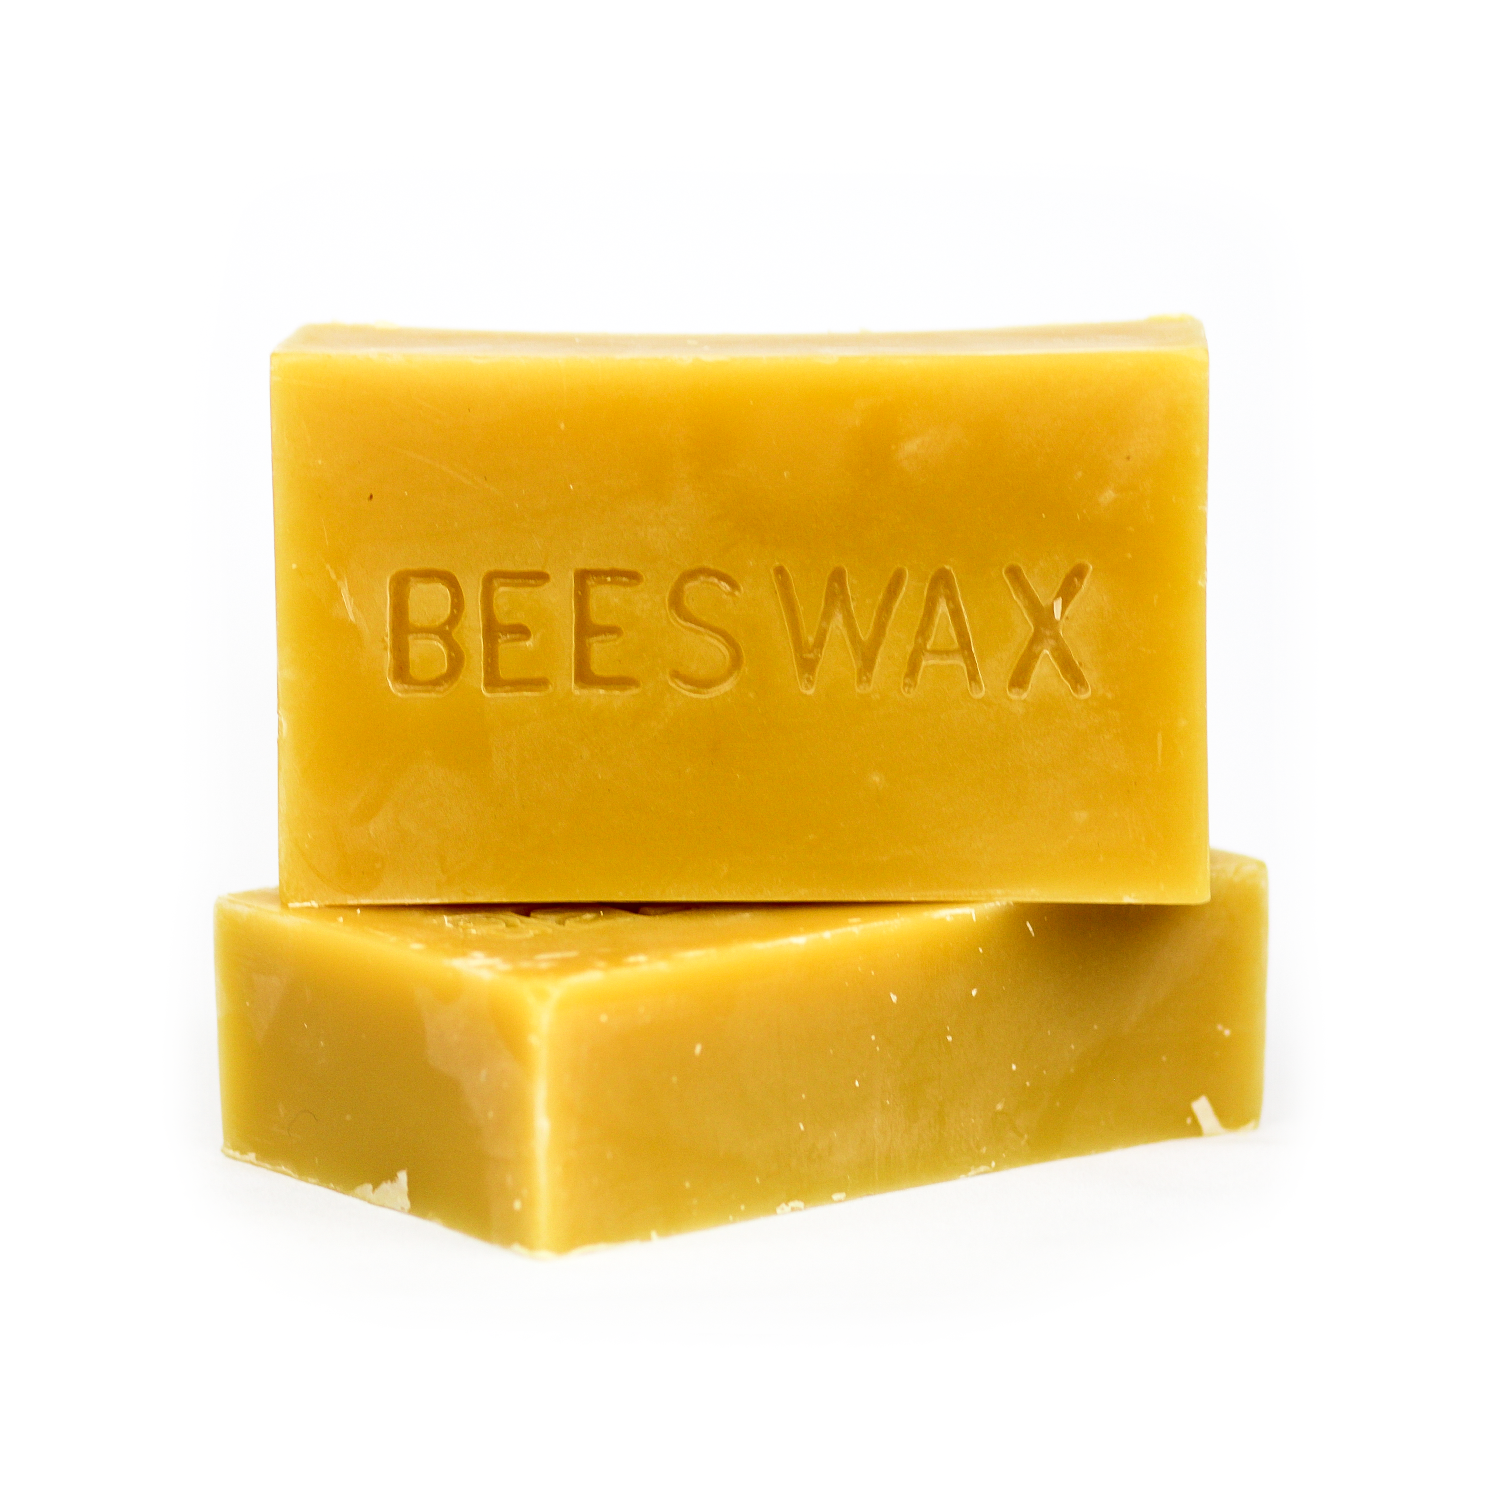 Beeswax 1 oz. - Quantity Discount